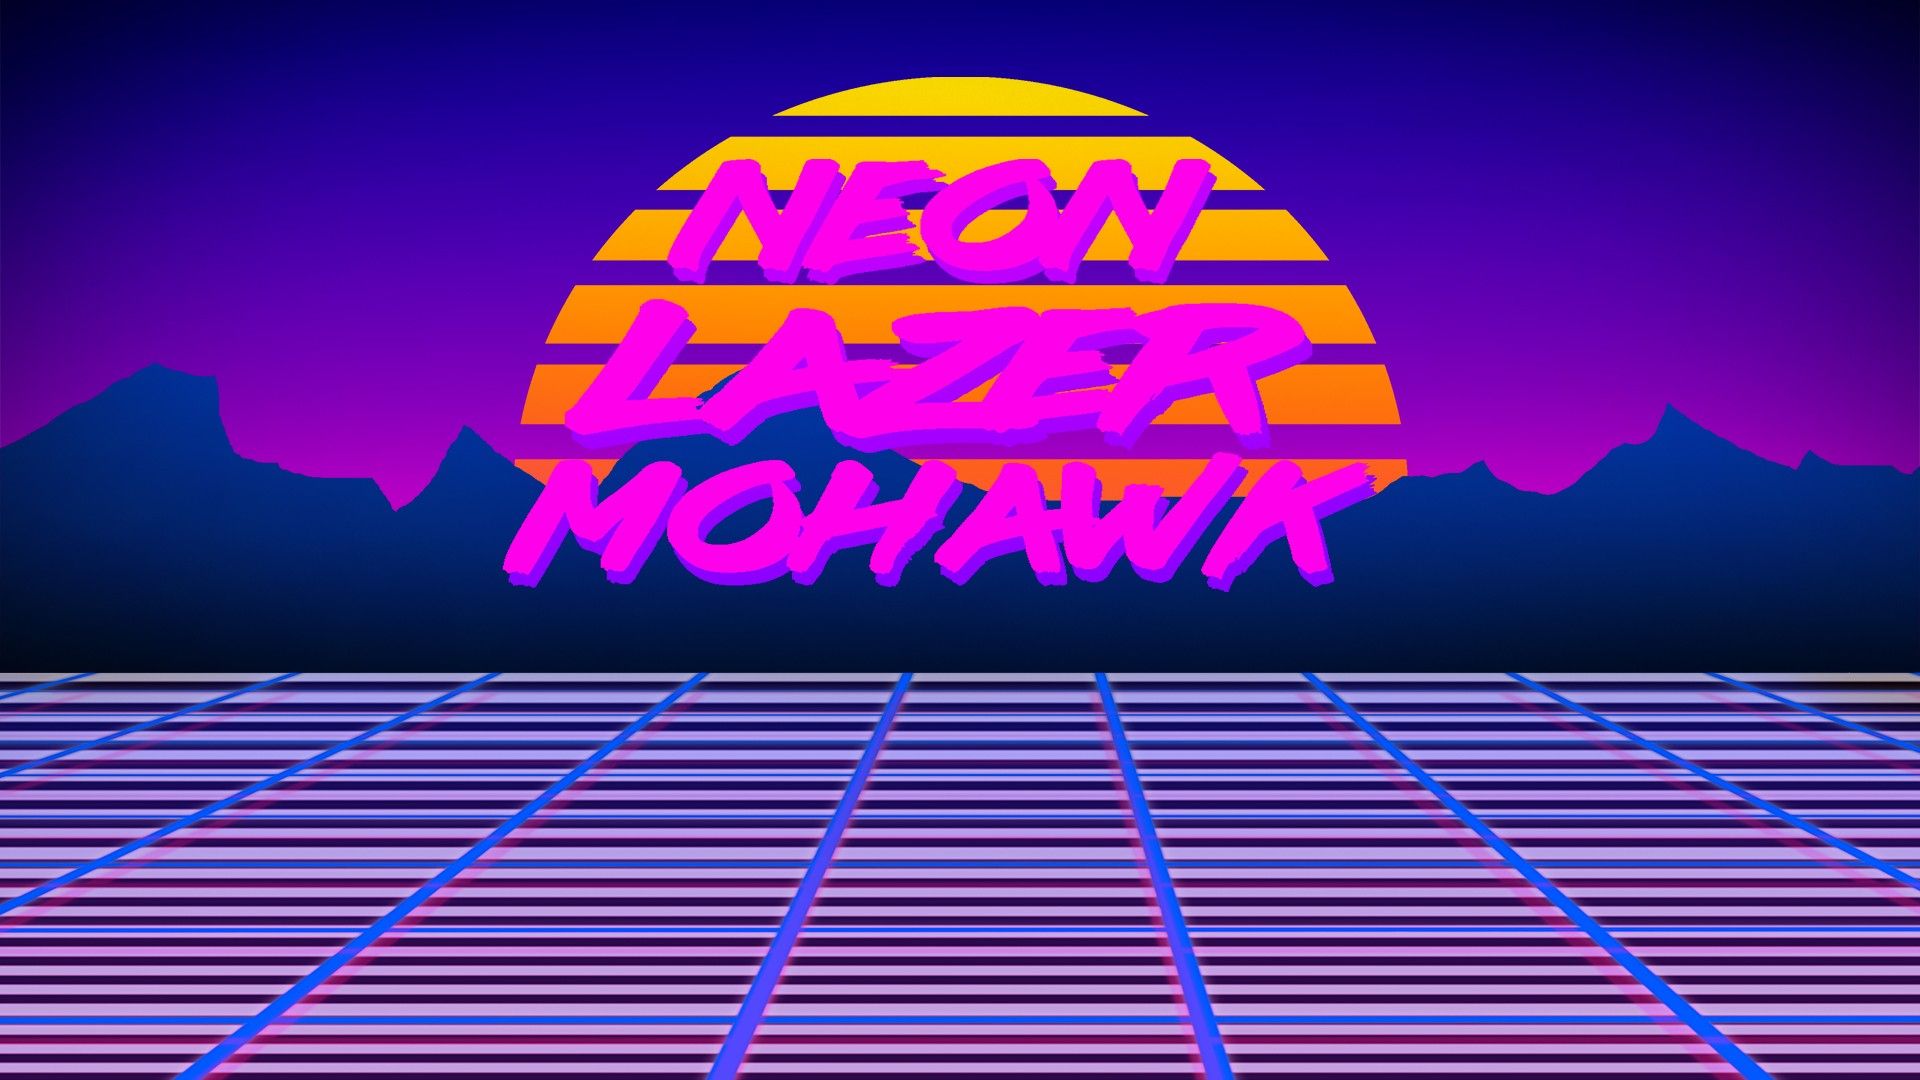 Neon Lazer Mohawk, 1980s, Retro games, Robot, Grid, Digital art